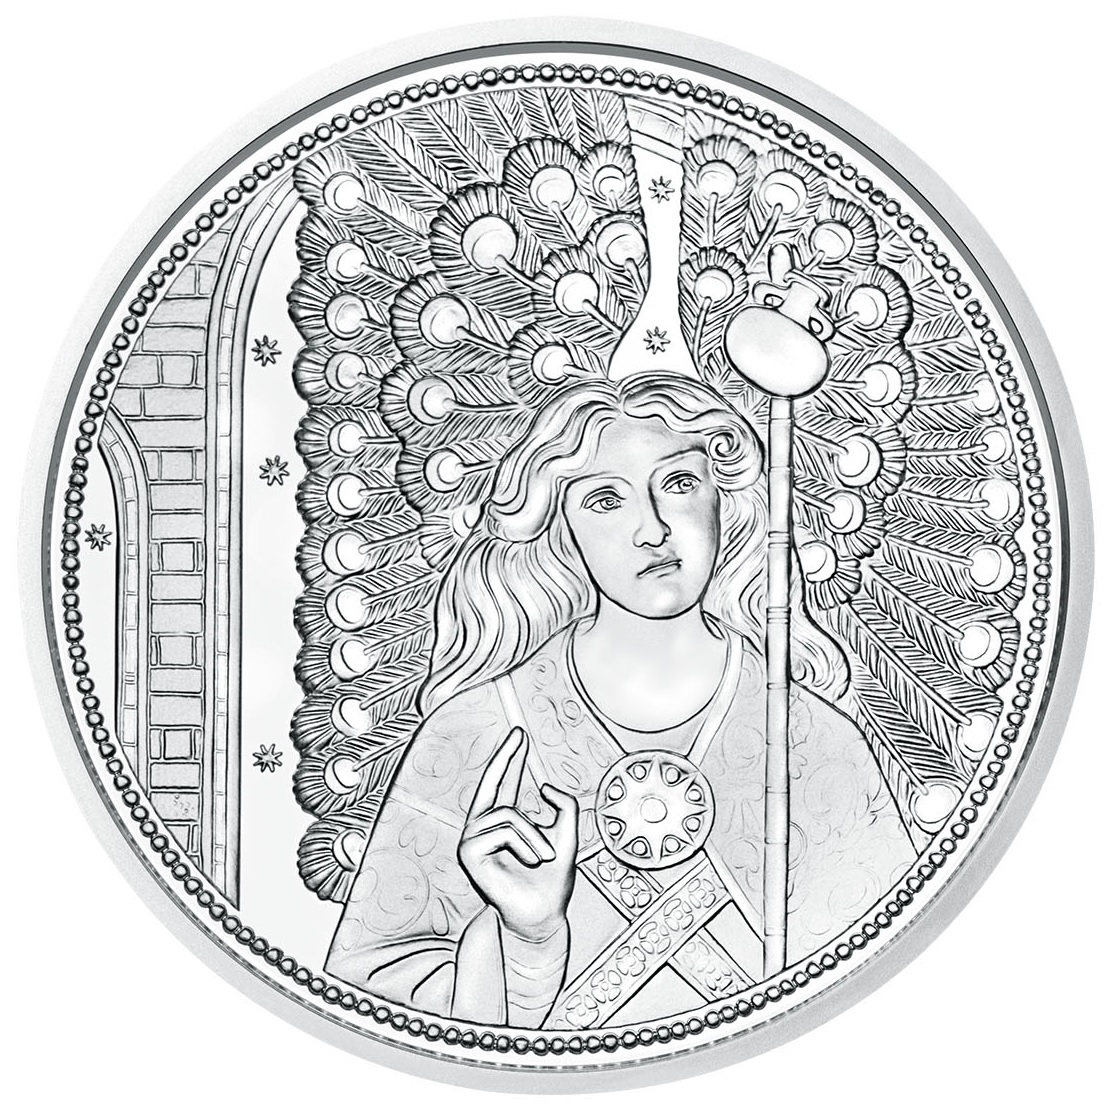 (EUR01.ComBU&BE.2018.22223) 10 euro Austria 2018 Proof silver - Raphael, the Healing angel Reverse (zoom)